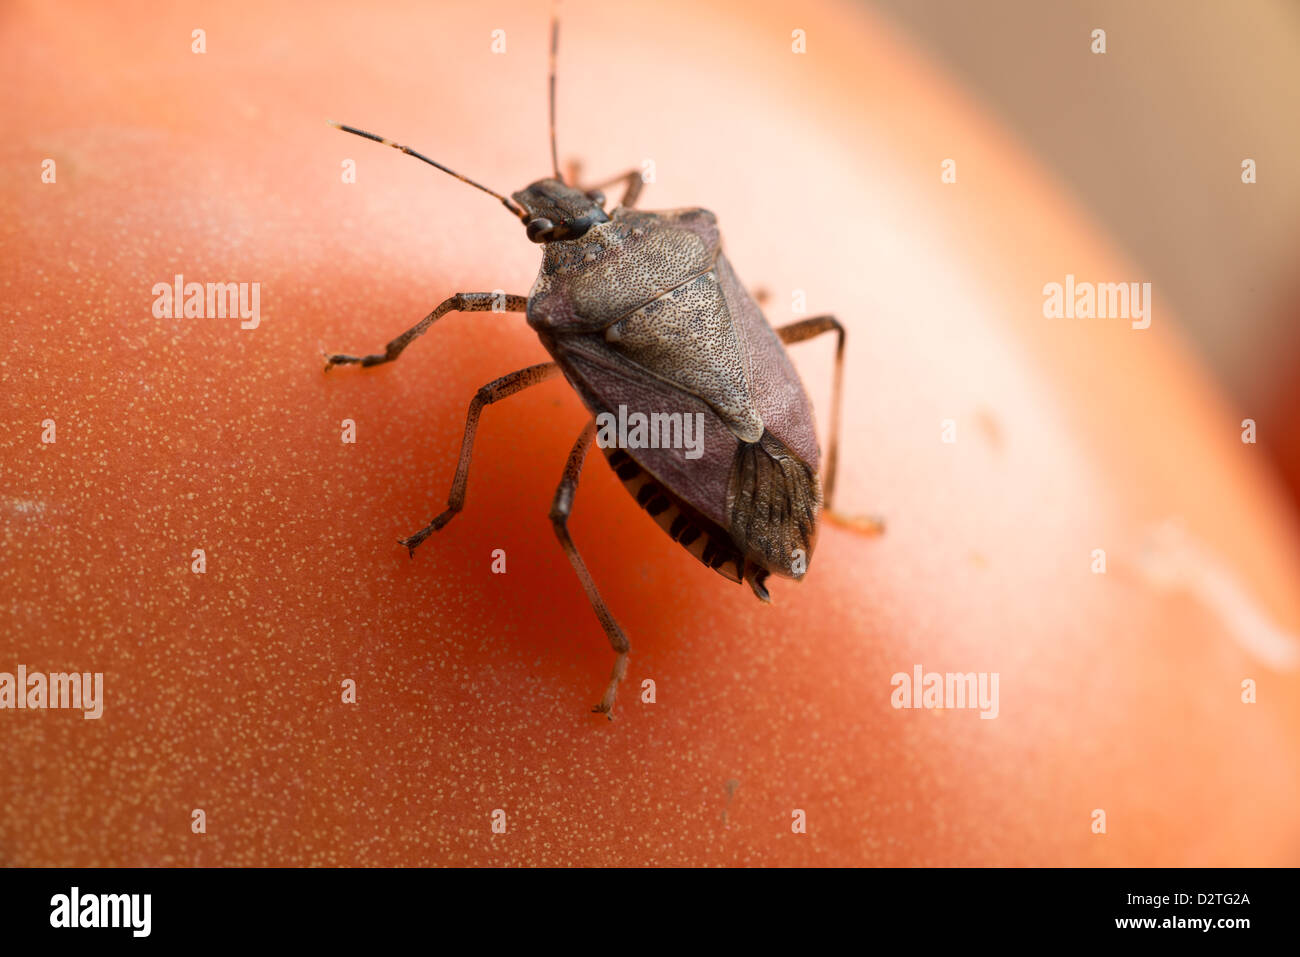 Halyomorpha Halys, braune Marmorated Gestank Bug, Stink Bug auf einer Tomate Stockfoto